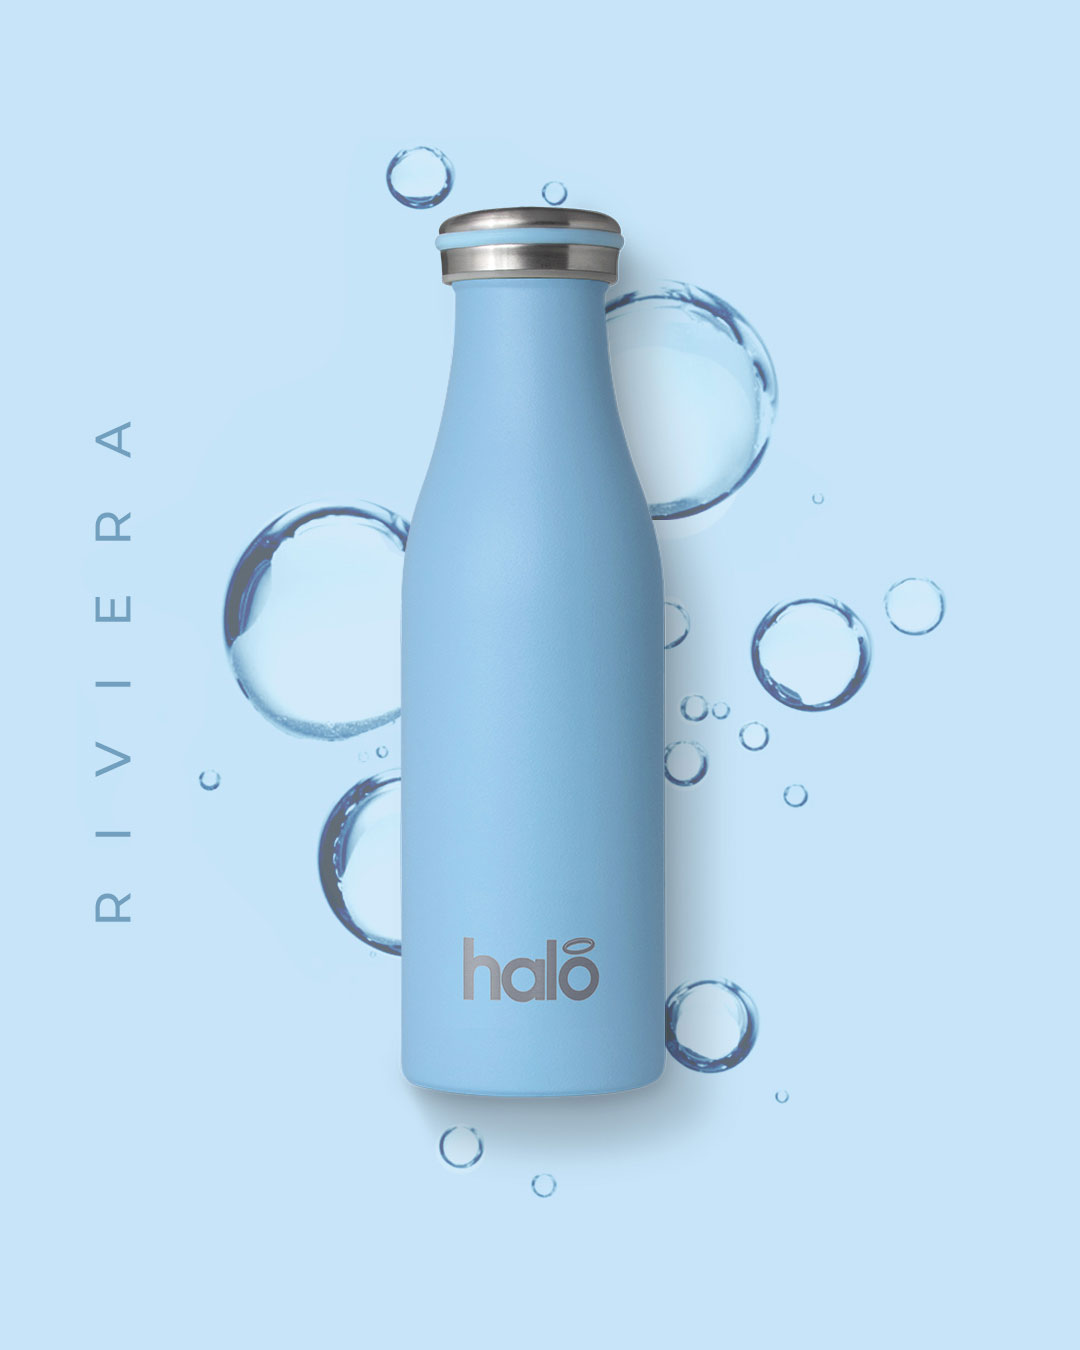 Halo Bottle 500ml blue steel reusable water bottle with bubbles.